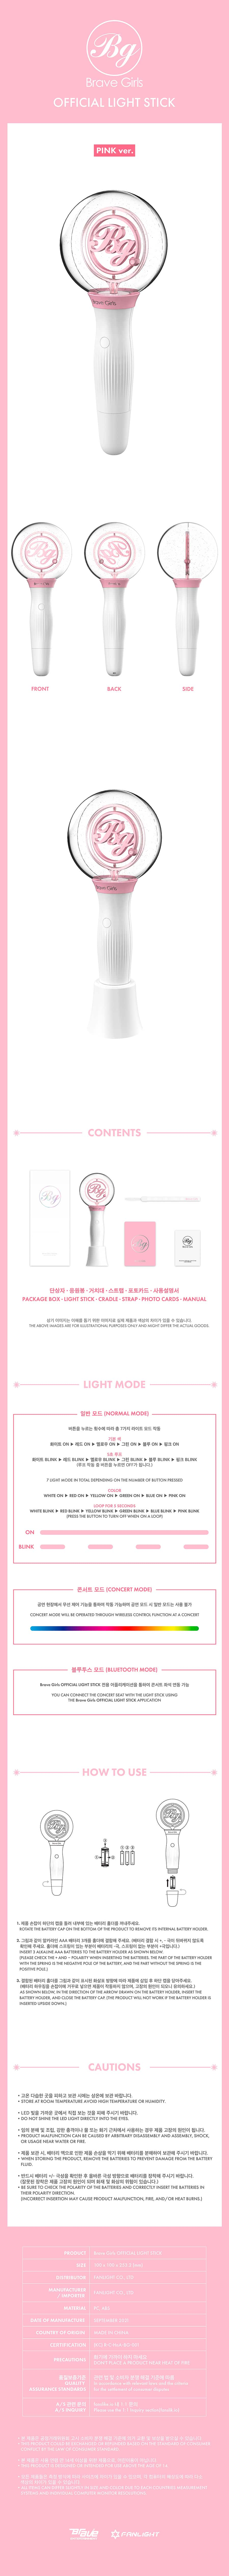 brave-girls-official-light-stick-pink-ver-wholesales